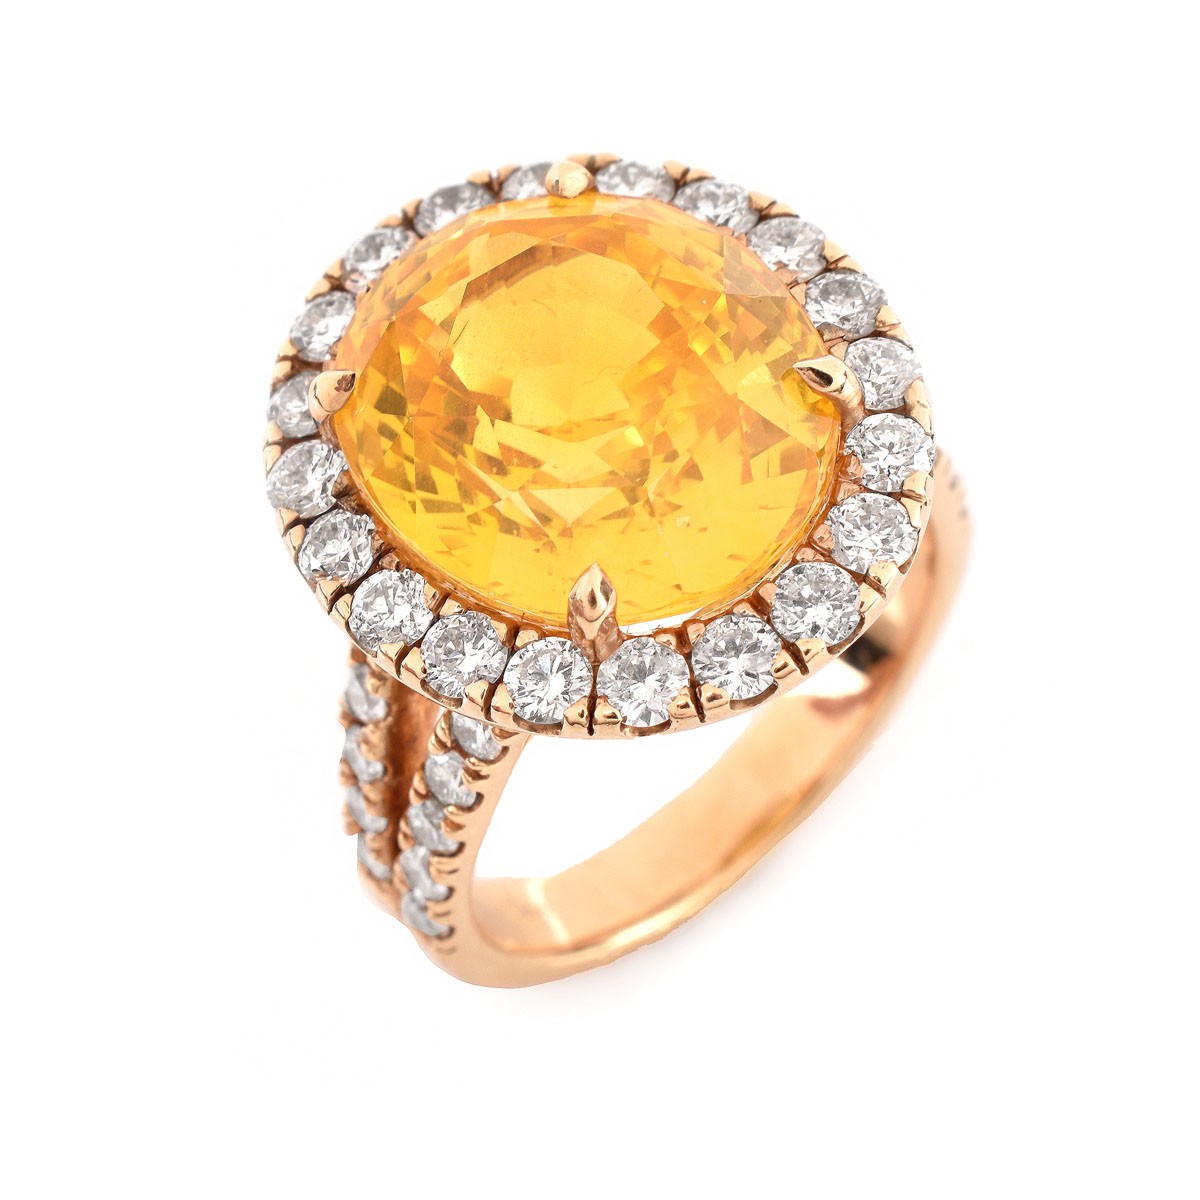 Approx.12.65 Carat Oval Cut Yellow Sapphire, 1.15 Carat Round Brilliant Cut Diamond and 18 Karat Yellow Gold Ring. Sapphire measures 14.58 x 12.36 x 8.43mm.